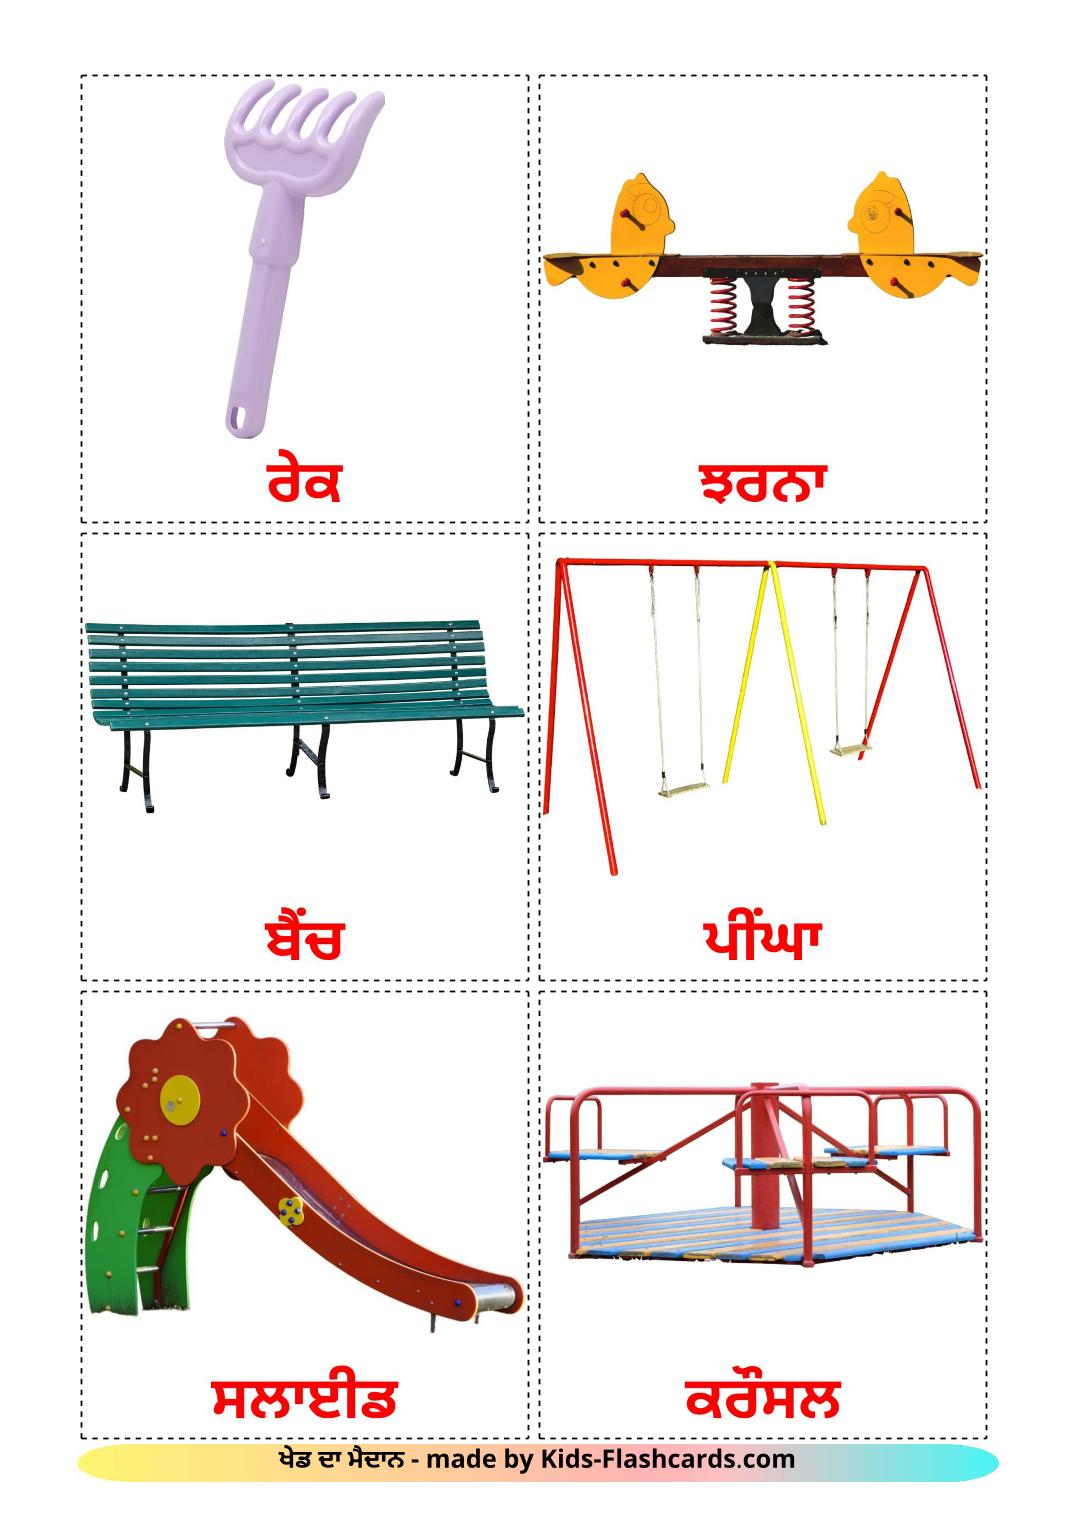 Parque infantil - 13 fichas de punjabi(gurmukhi) para imprimir gratis 